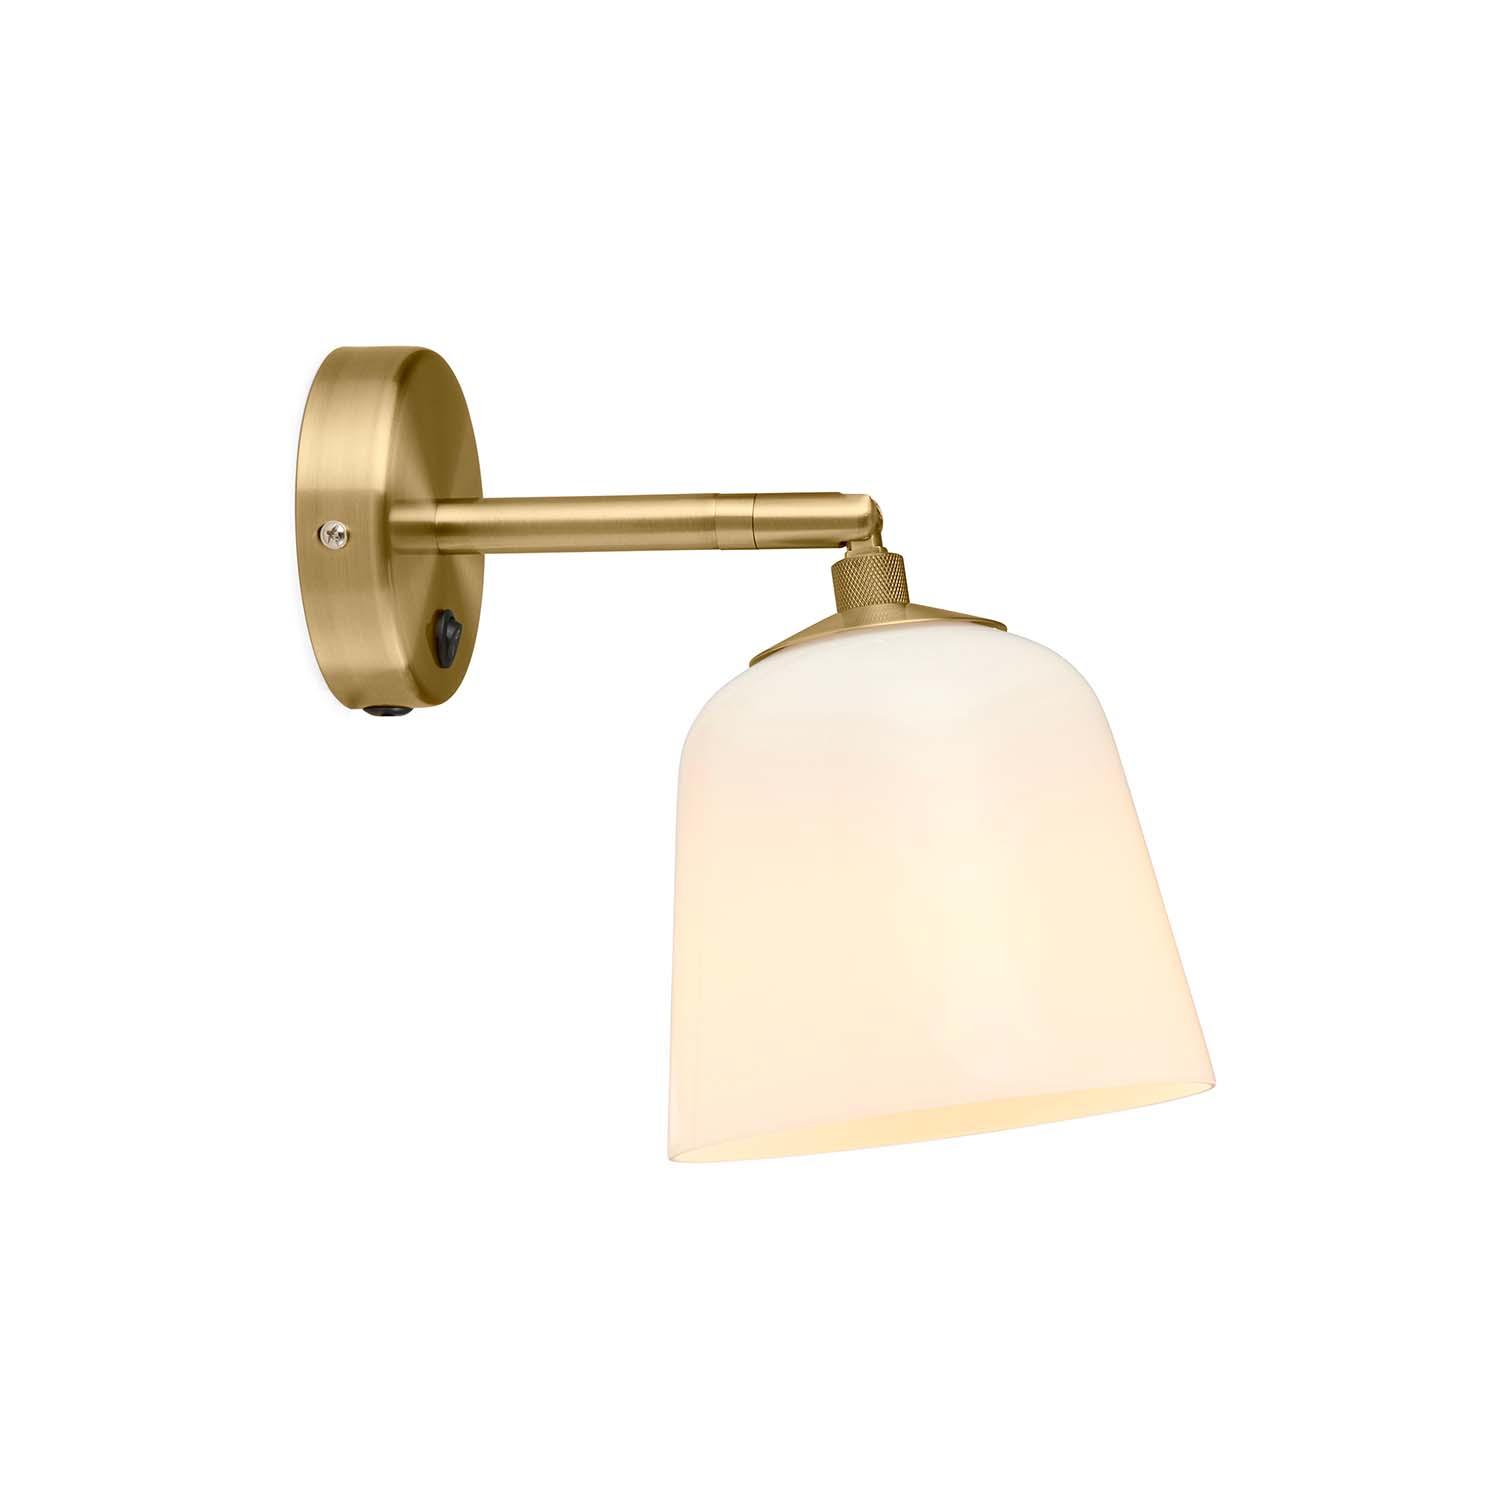 ROOM 49 - Blown glass and brass wall light